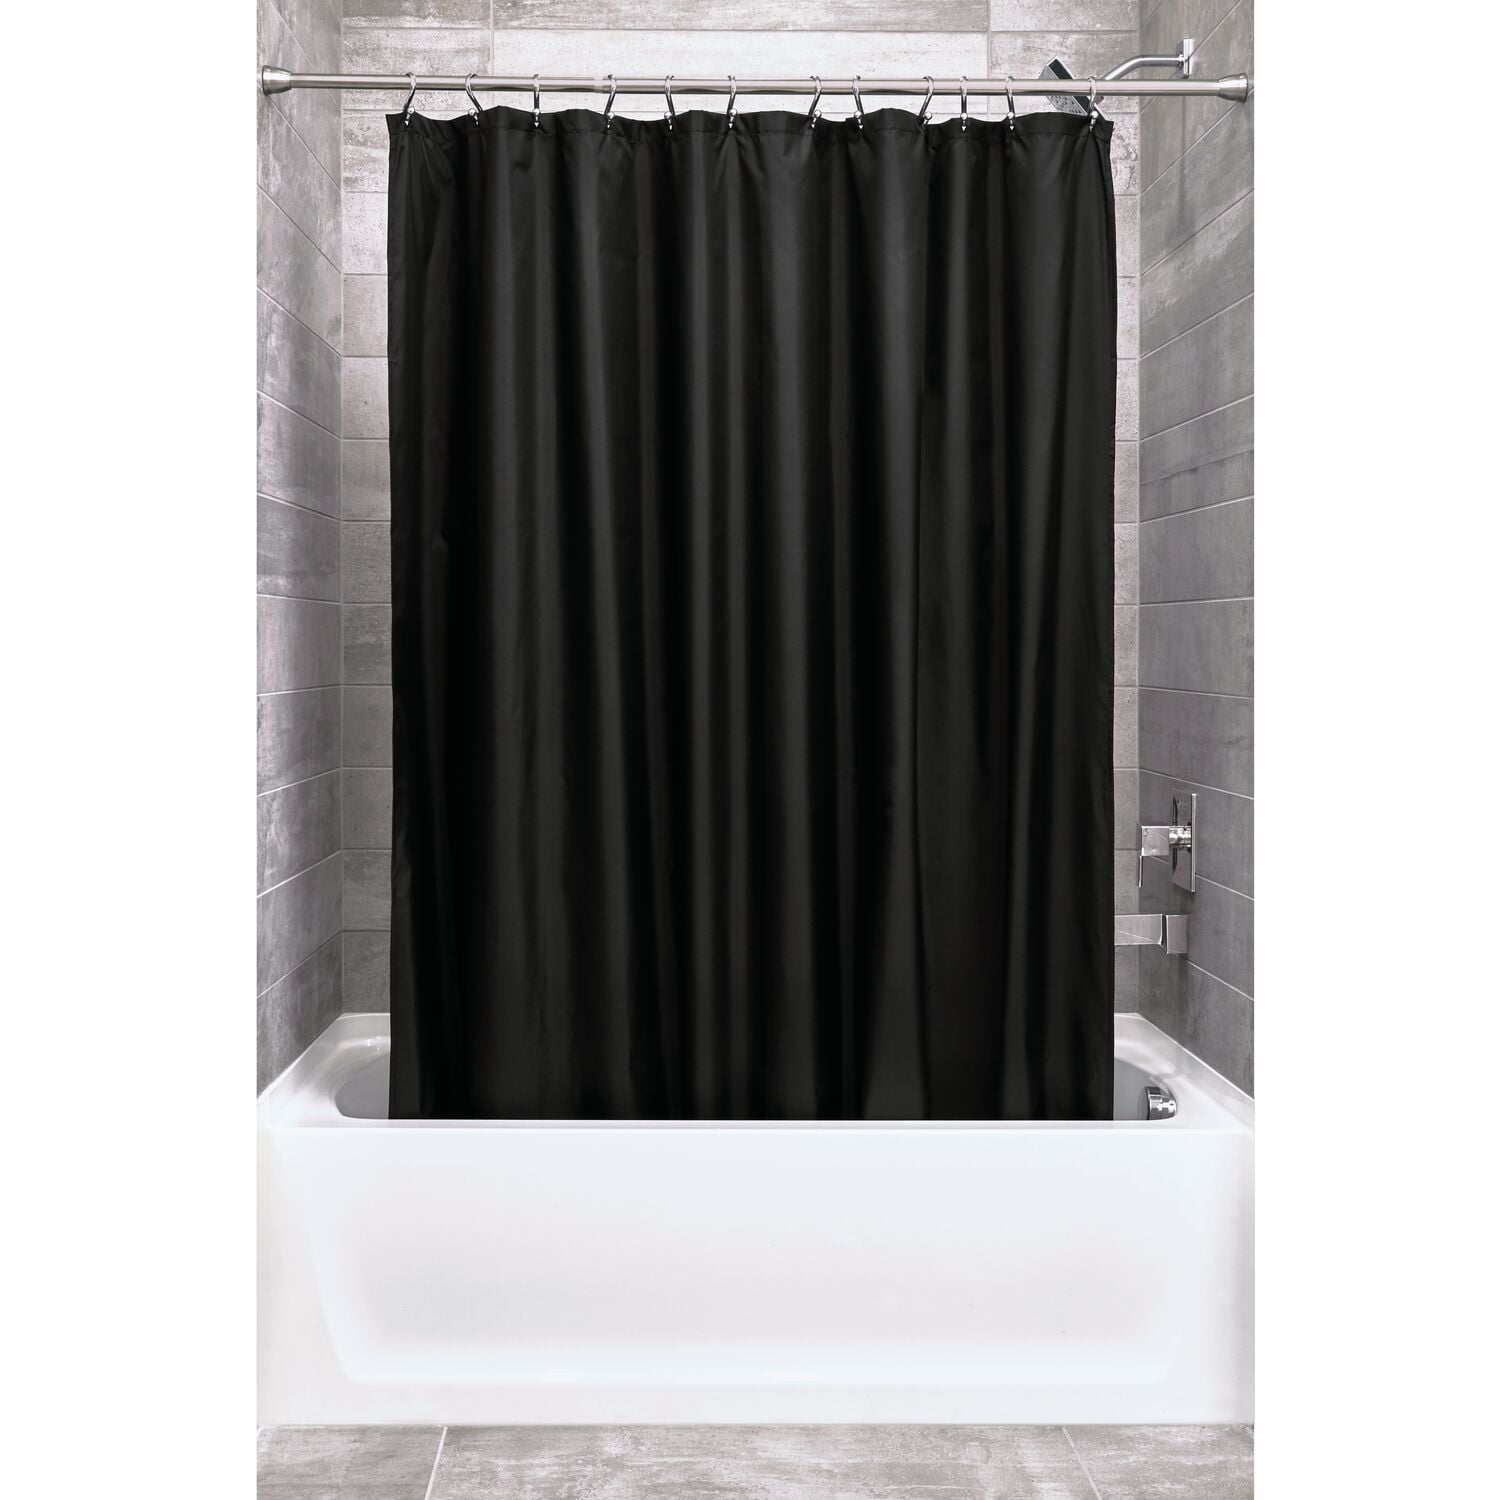 Knight Sun Waterproof Bathroom Polyester Shower Curtain Liner Water Resistant 